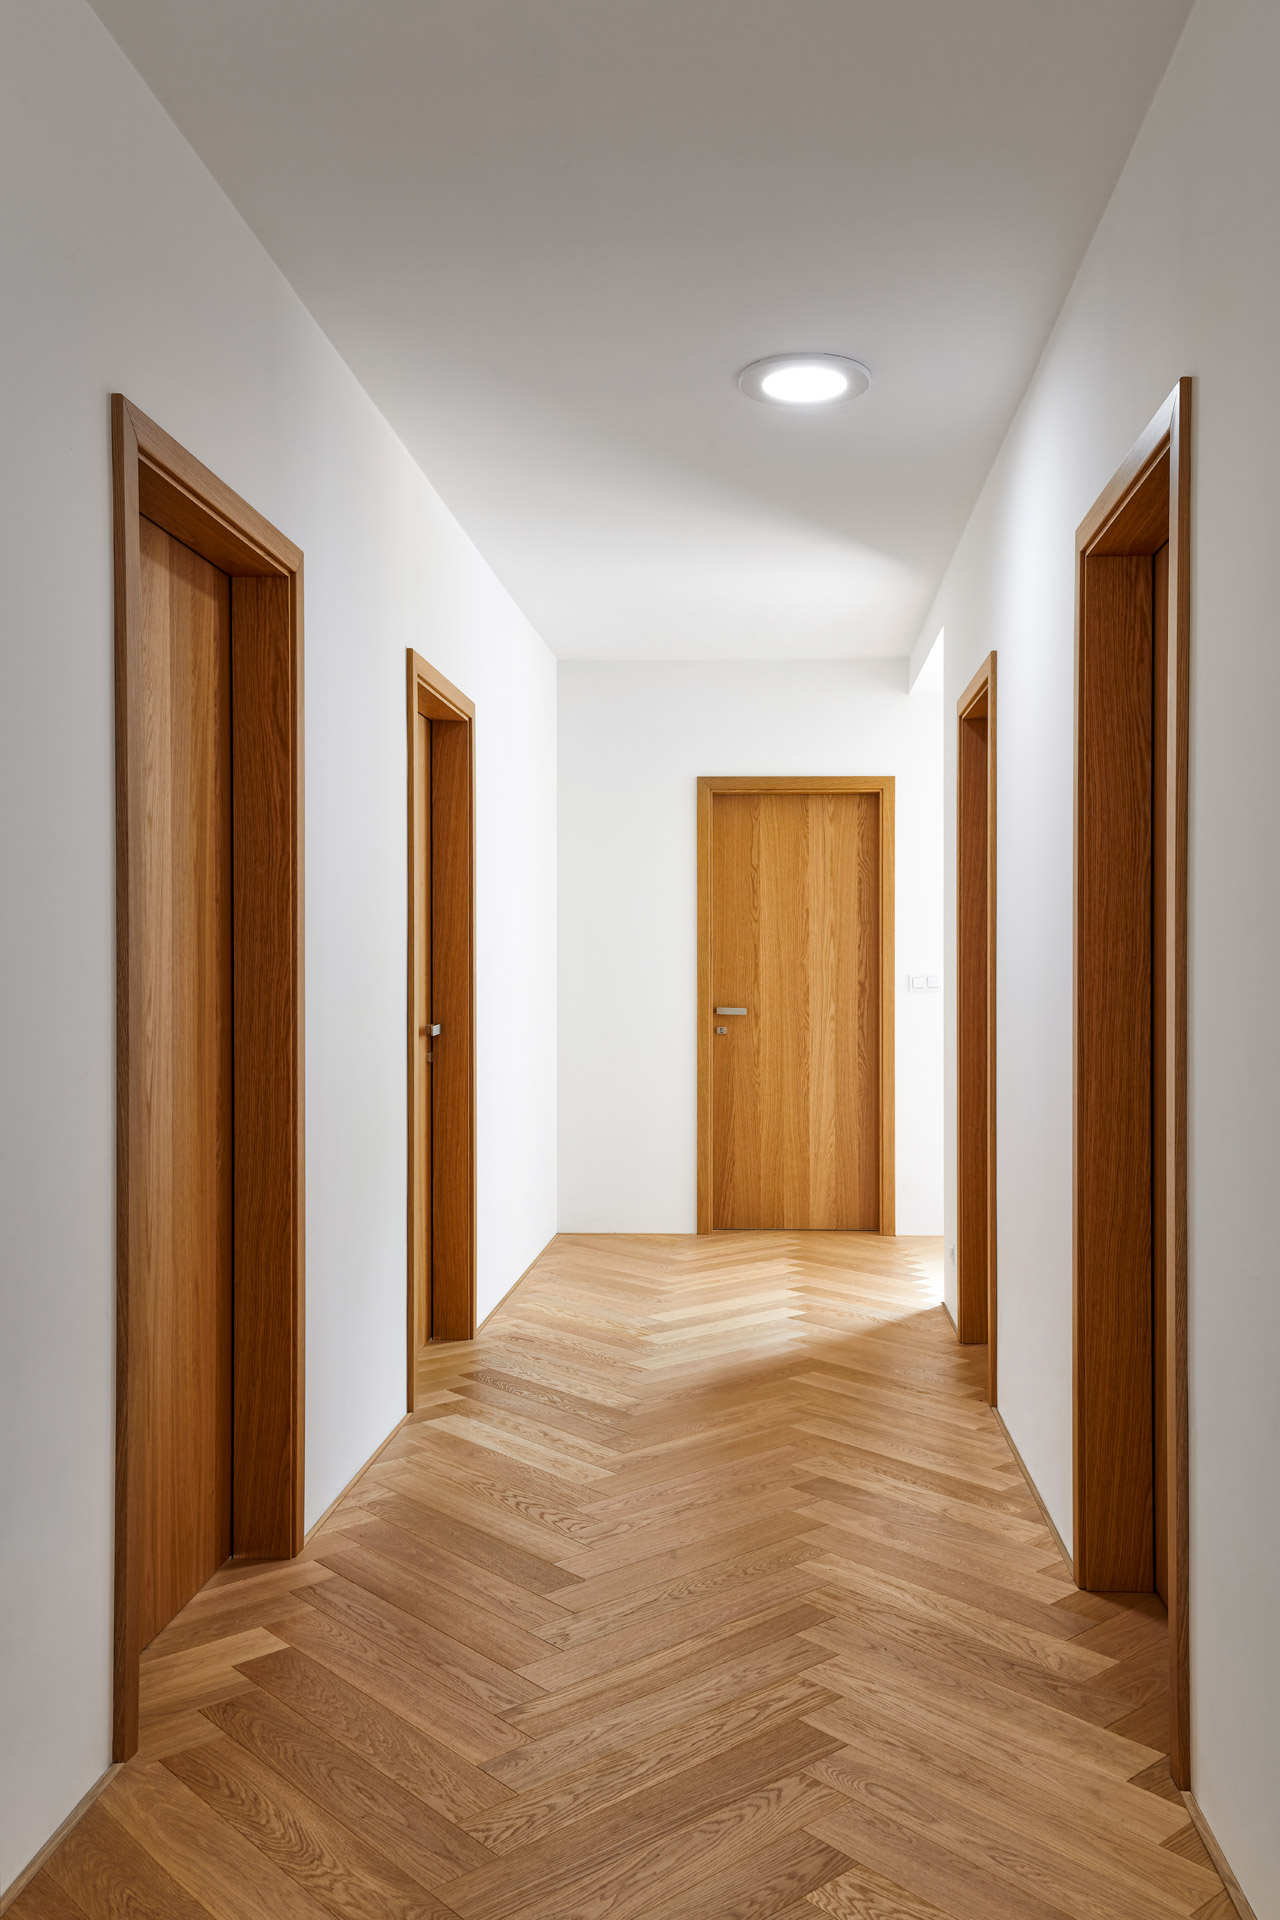 Hanák furniture Realization Interior doors